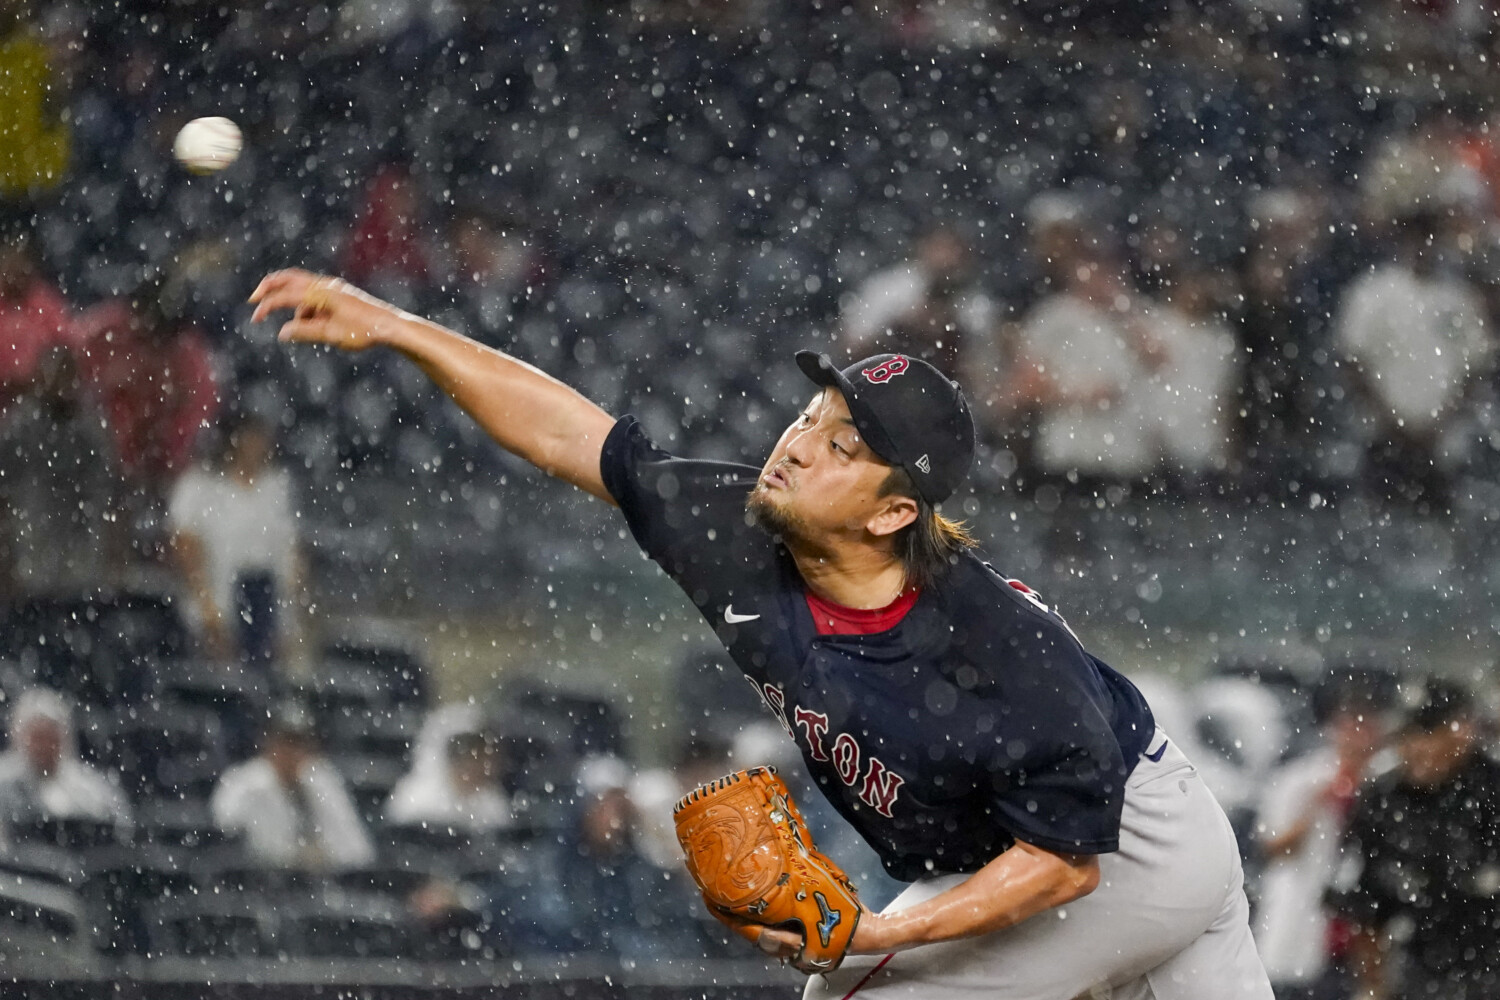 Hirokazu Sawamura's MLB Debut 